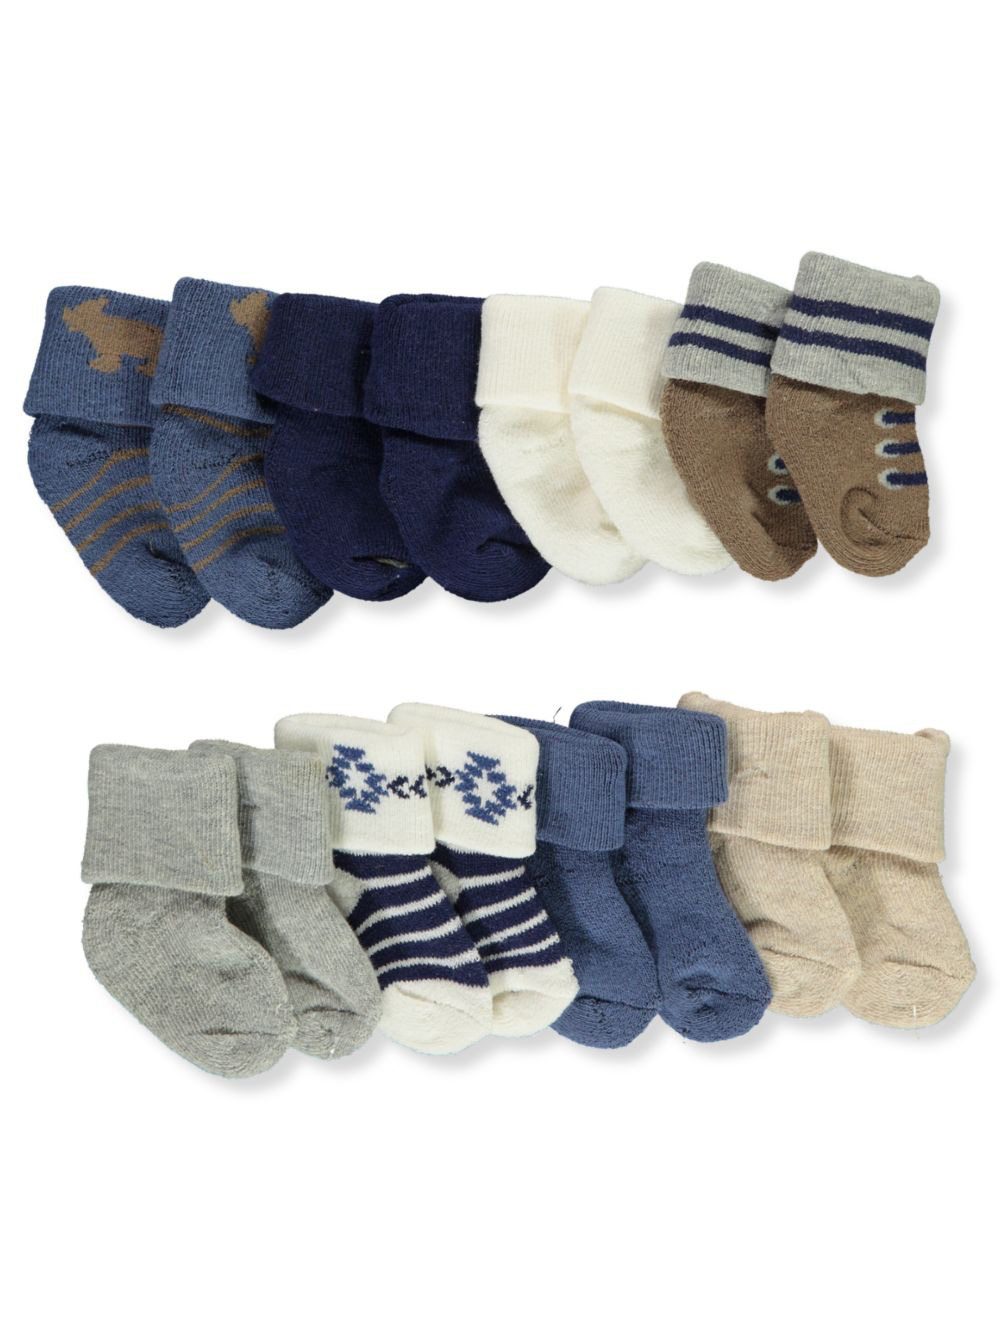 Hudson Baby Socks